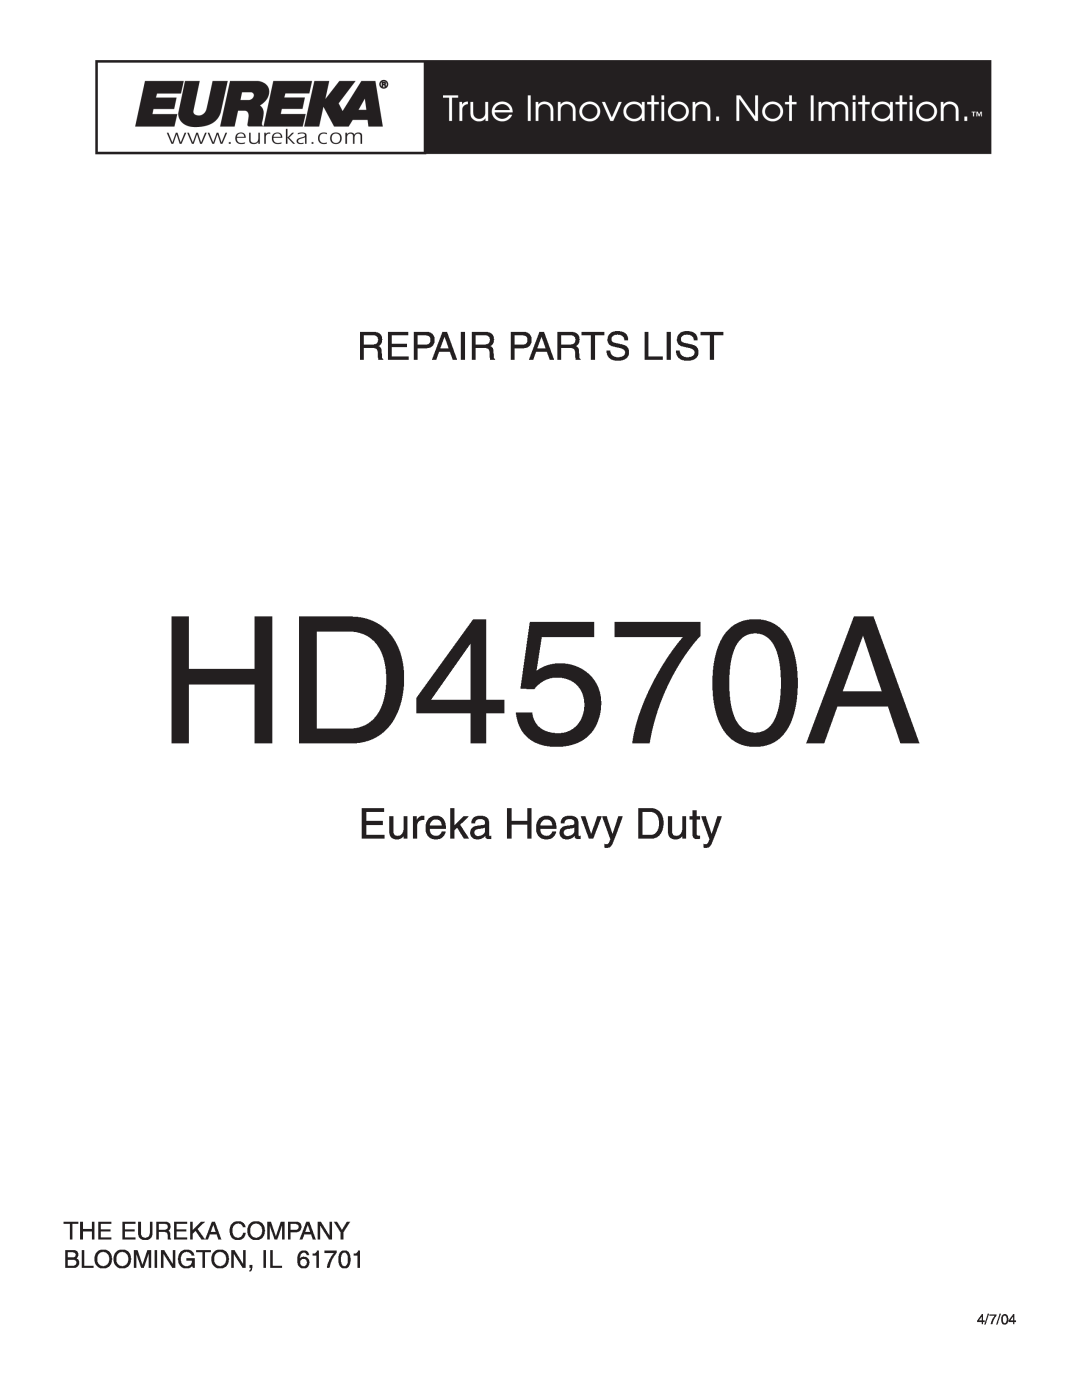 Eureka warranty HD4570A, Eureka Heavy Duty, Repair Parts List, The Eureka Company Bloomington, Il, 4/7/04 